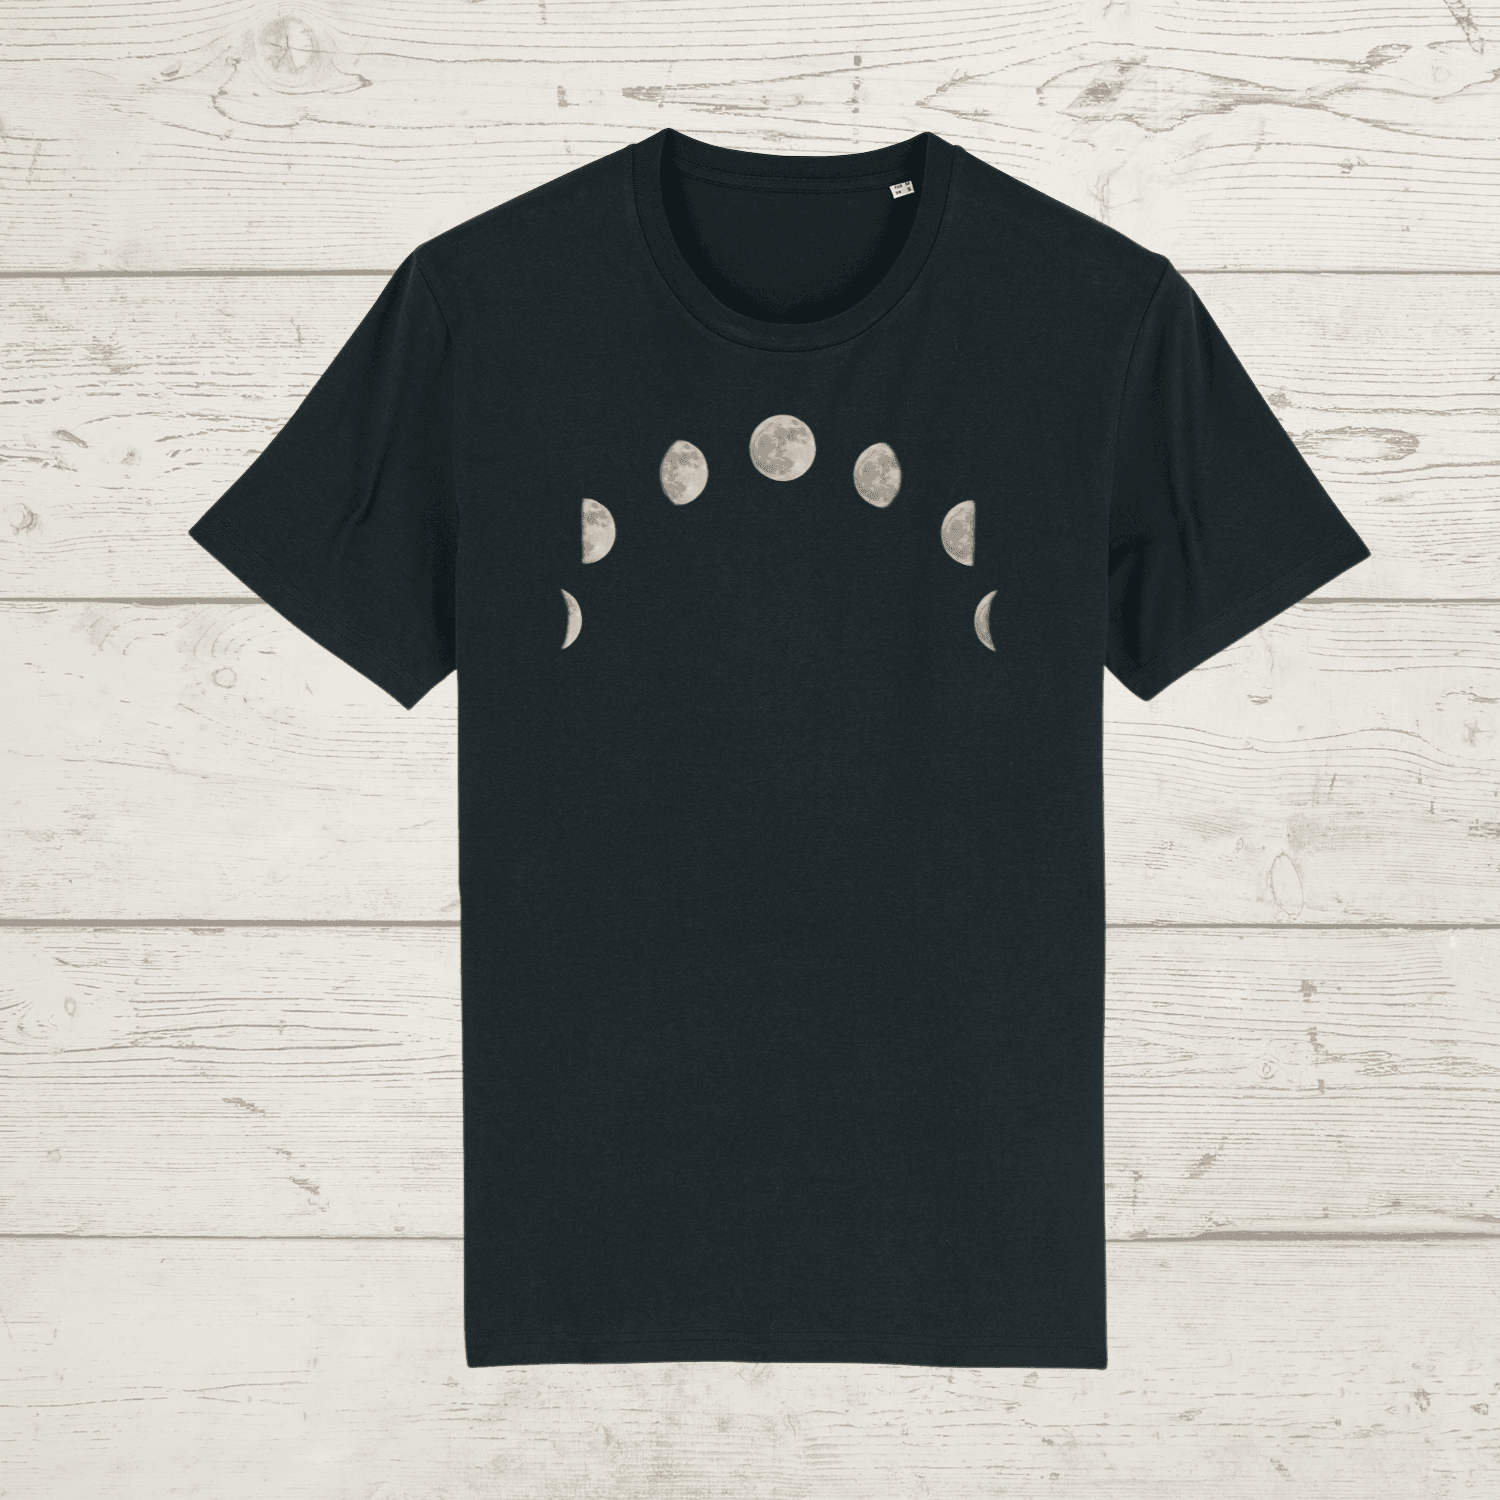 Kid’s moon phases t-shirt - black / 3-4 years - kid’s